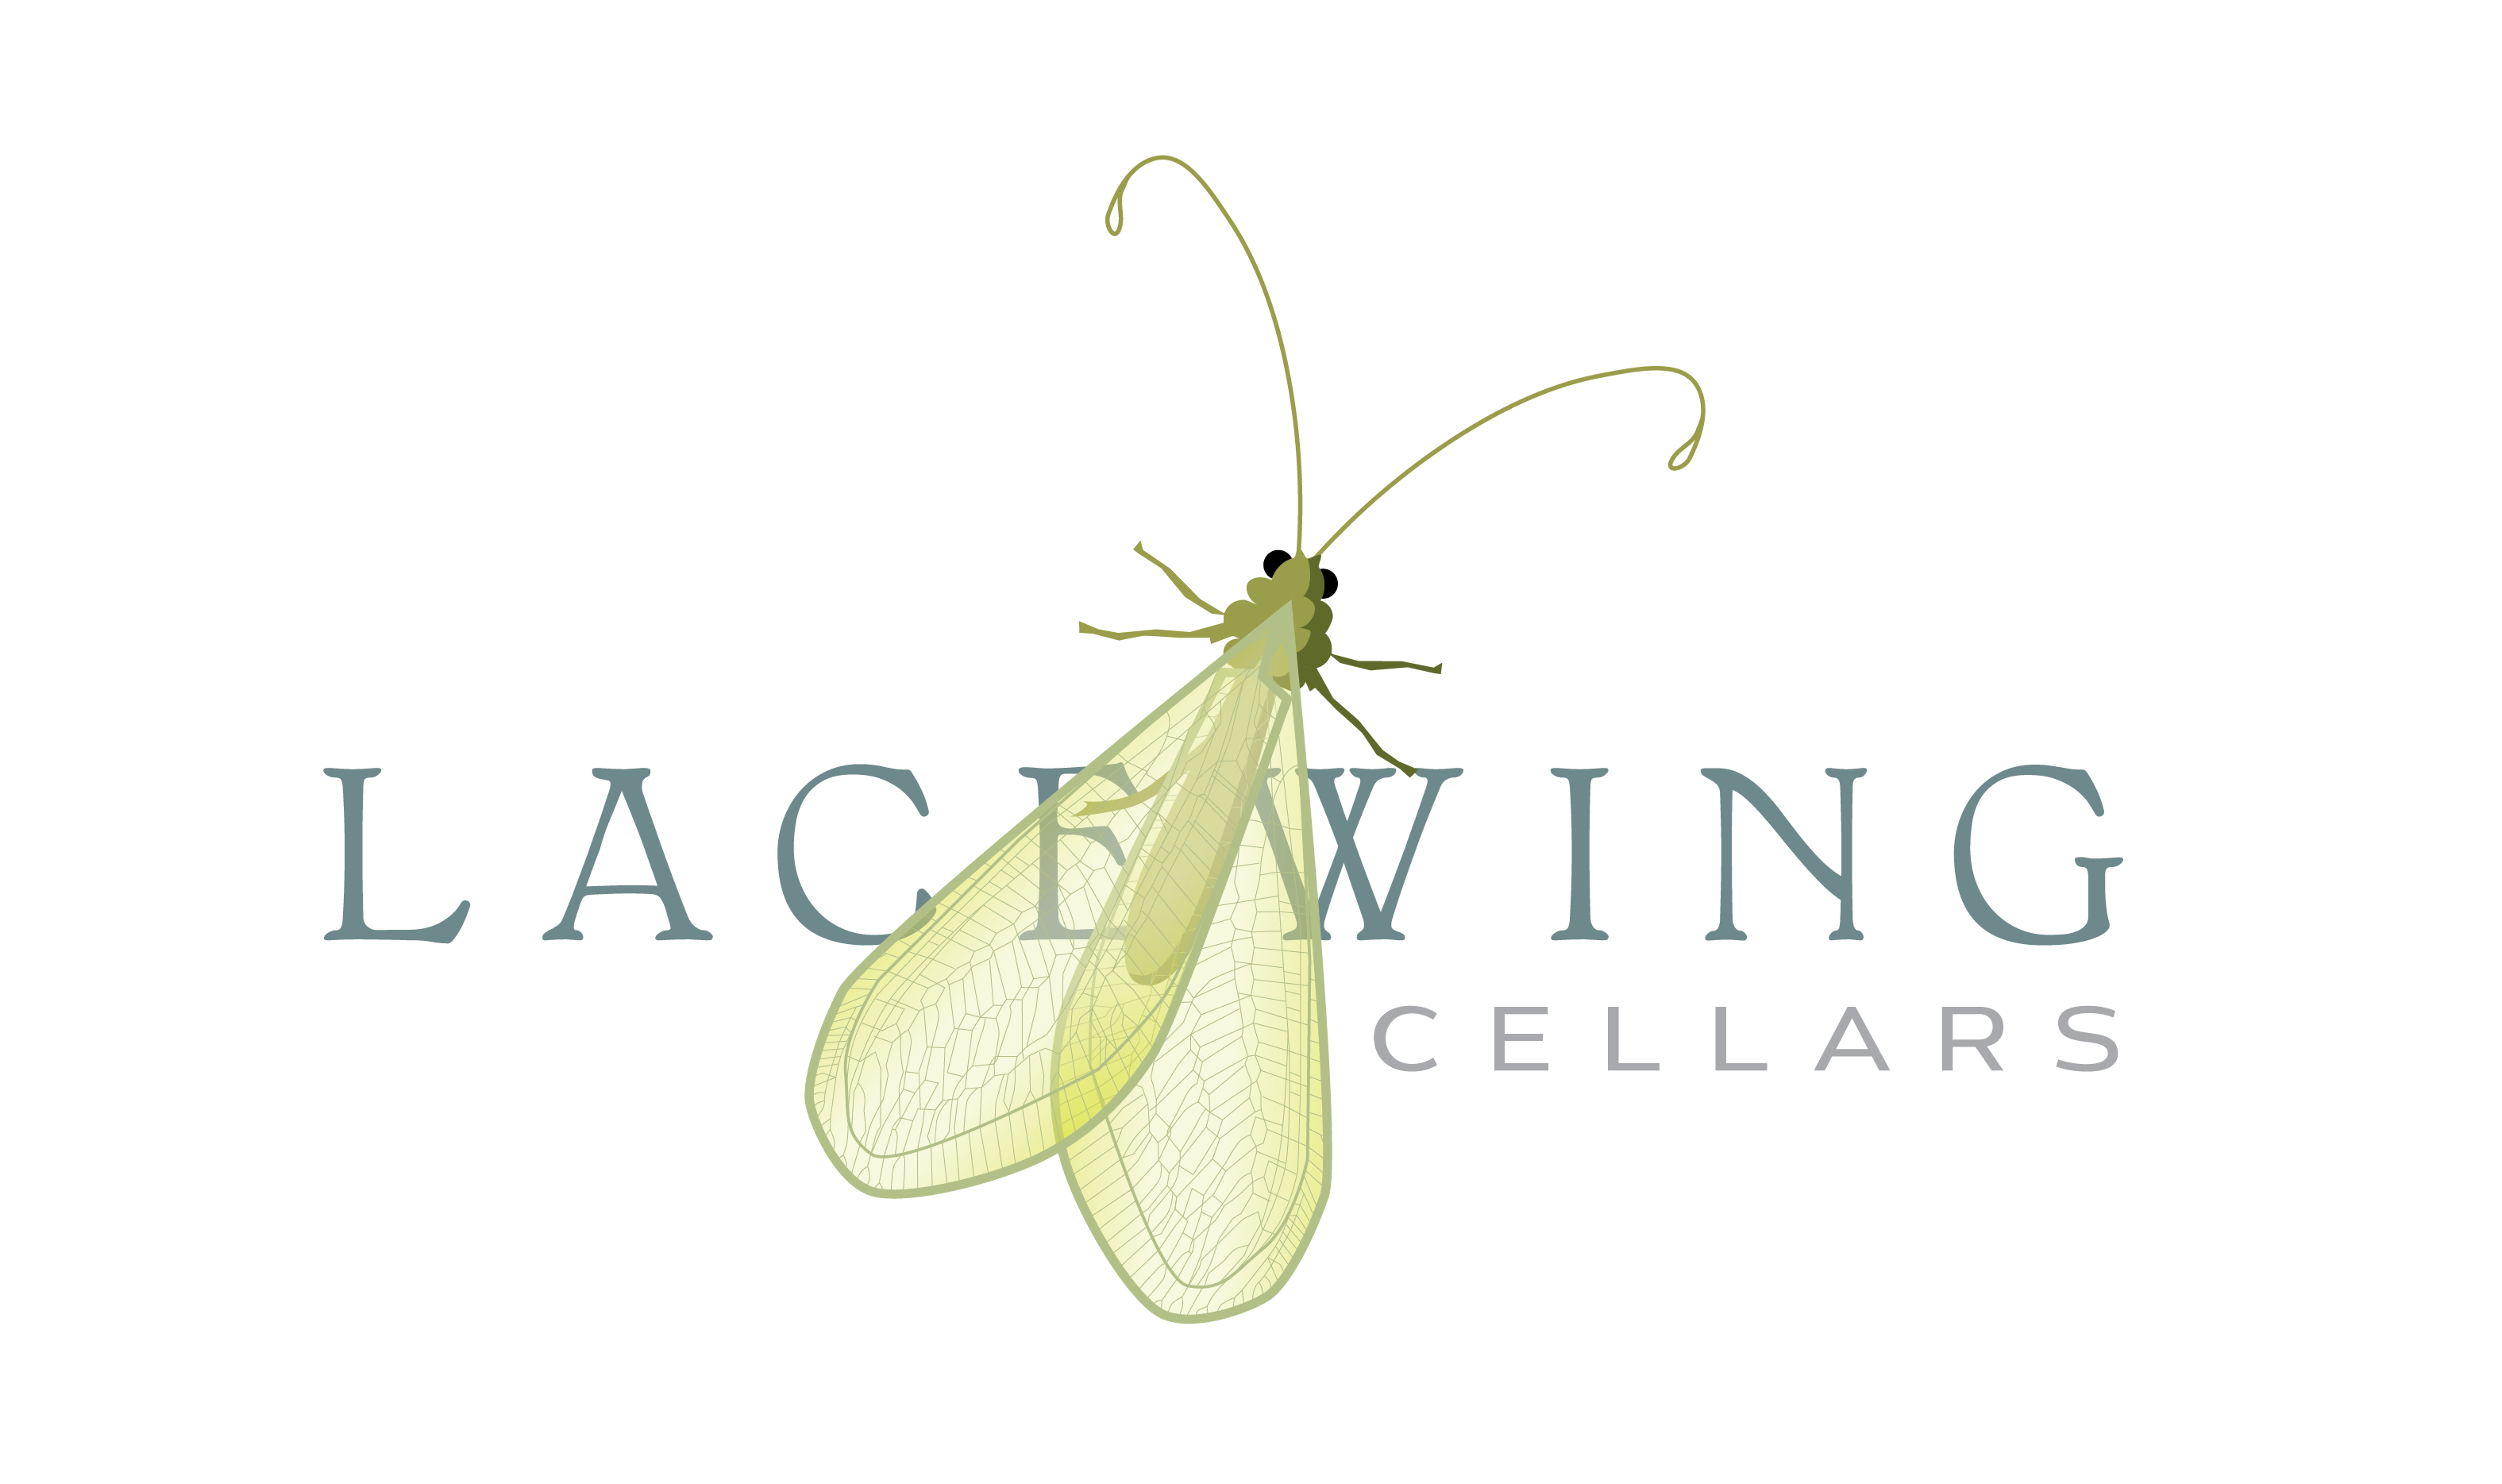 Buy - Lacewing Cellars